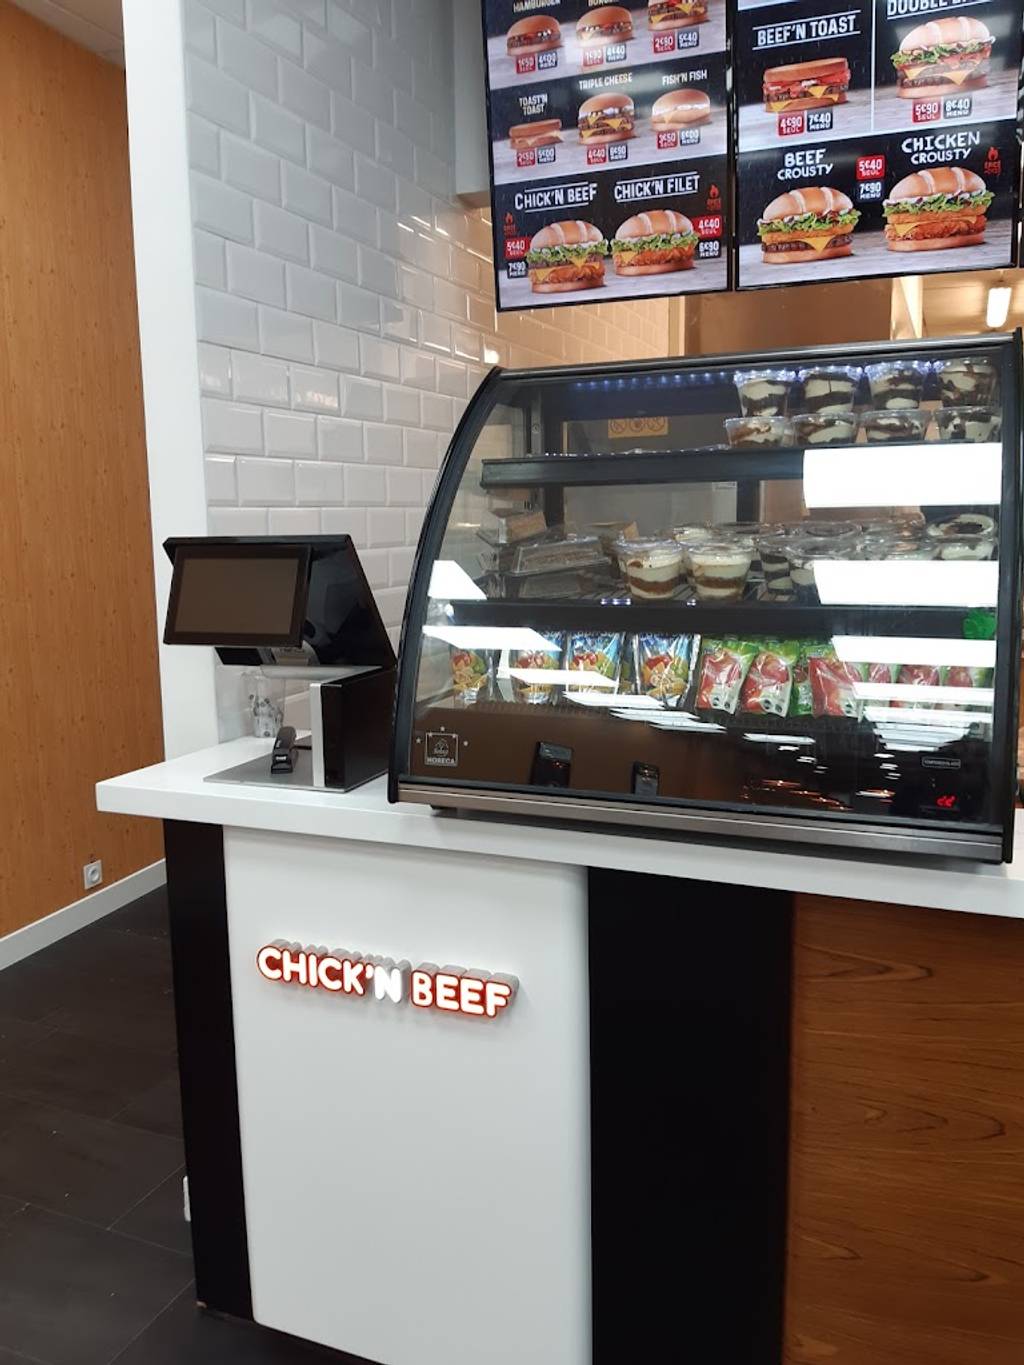 Chick'n Beef Roubaix Roubaix - Food Shelf Kitchen appliance Gas Shelving